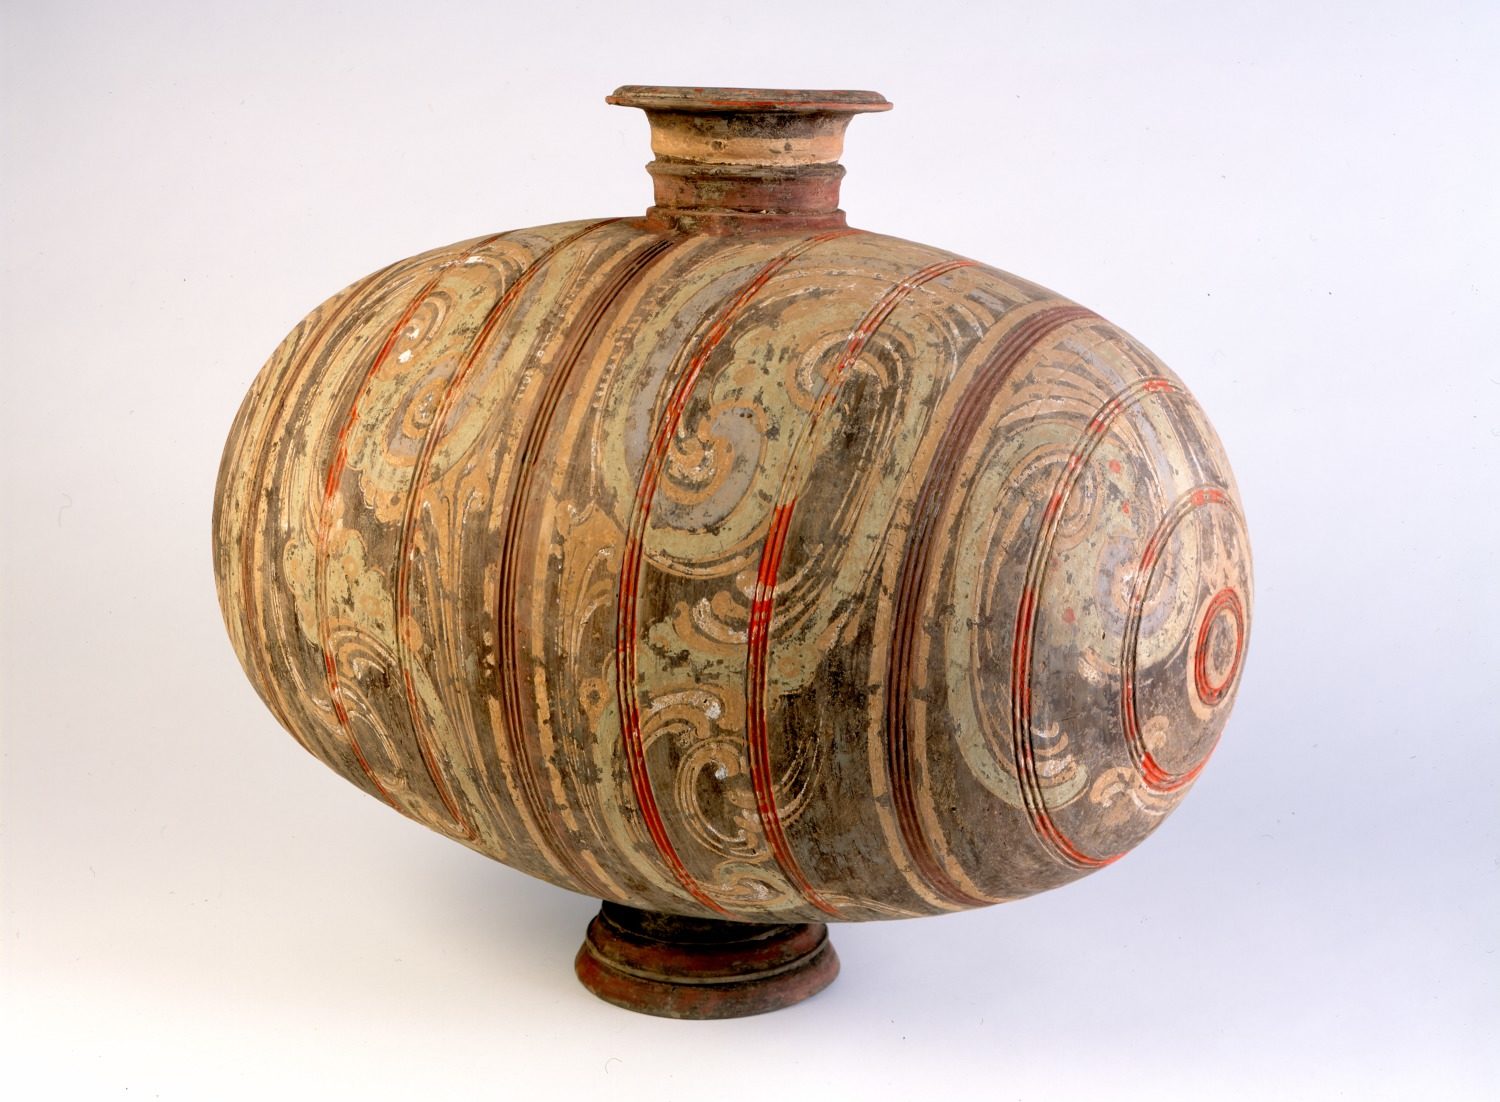 Unknown, Cocoon-shaped pottery jar (Vasija de cerámica en forma de capullo), Western Han dynasty, 1st century B.C.-26 A.D. Ceramic with pigments. Gift of Richard J. Faletti.